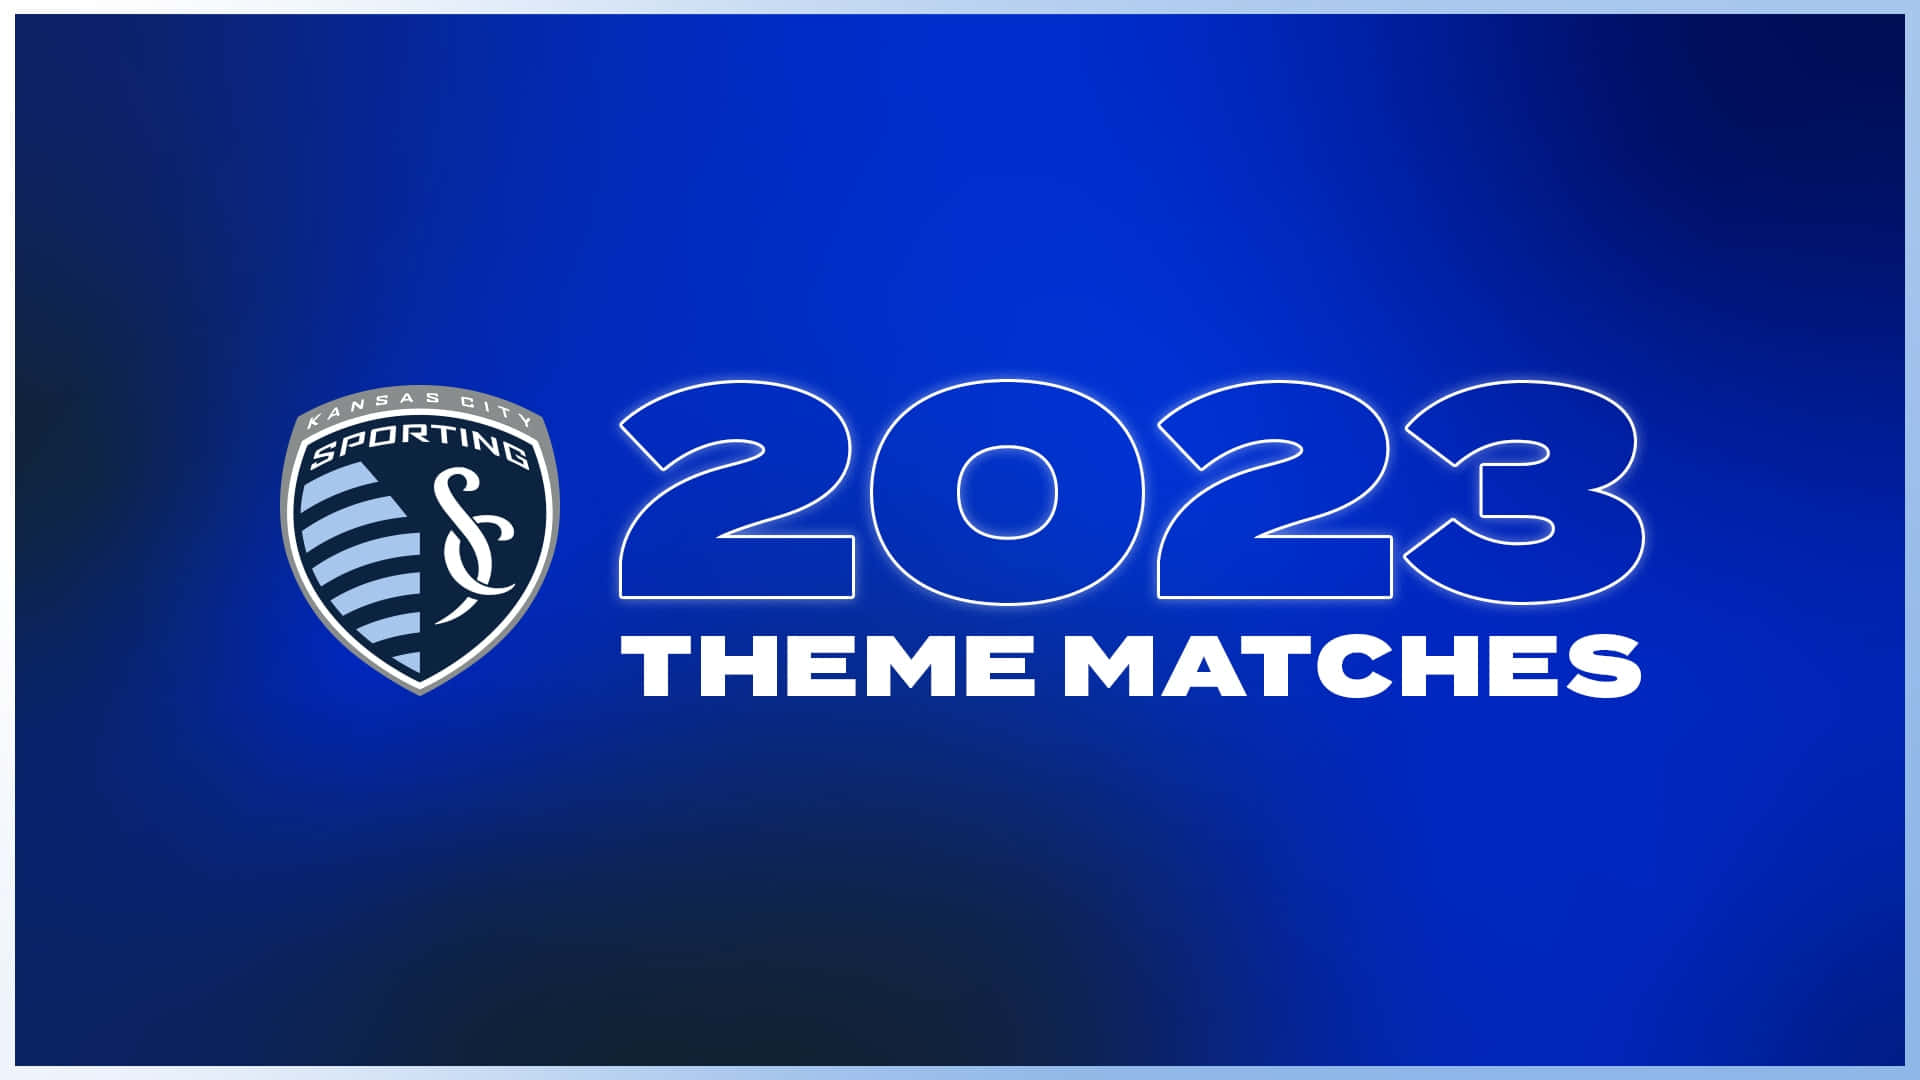 Sporting Kansas City 2023 Matches Wallpaper